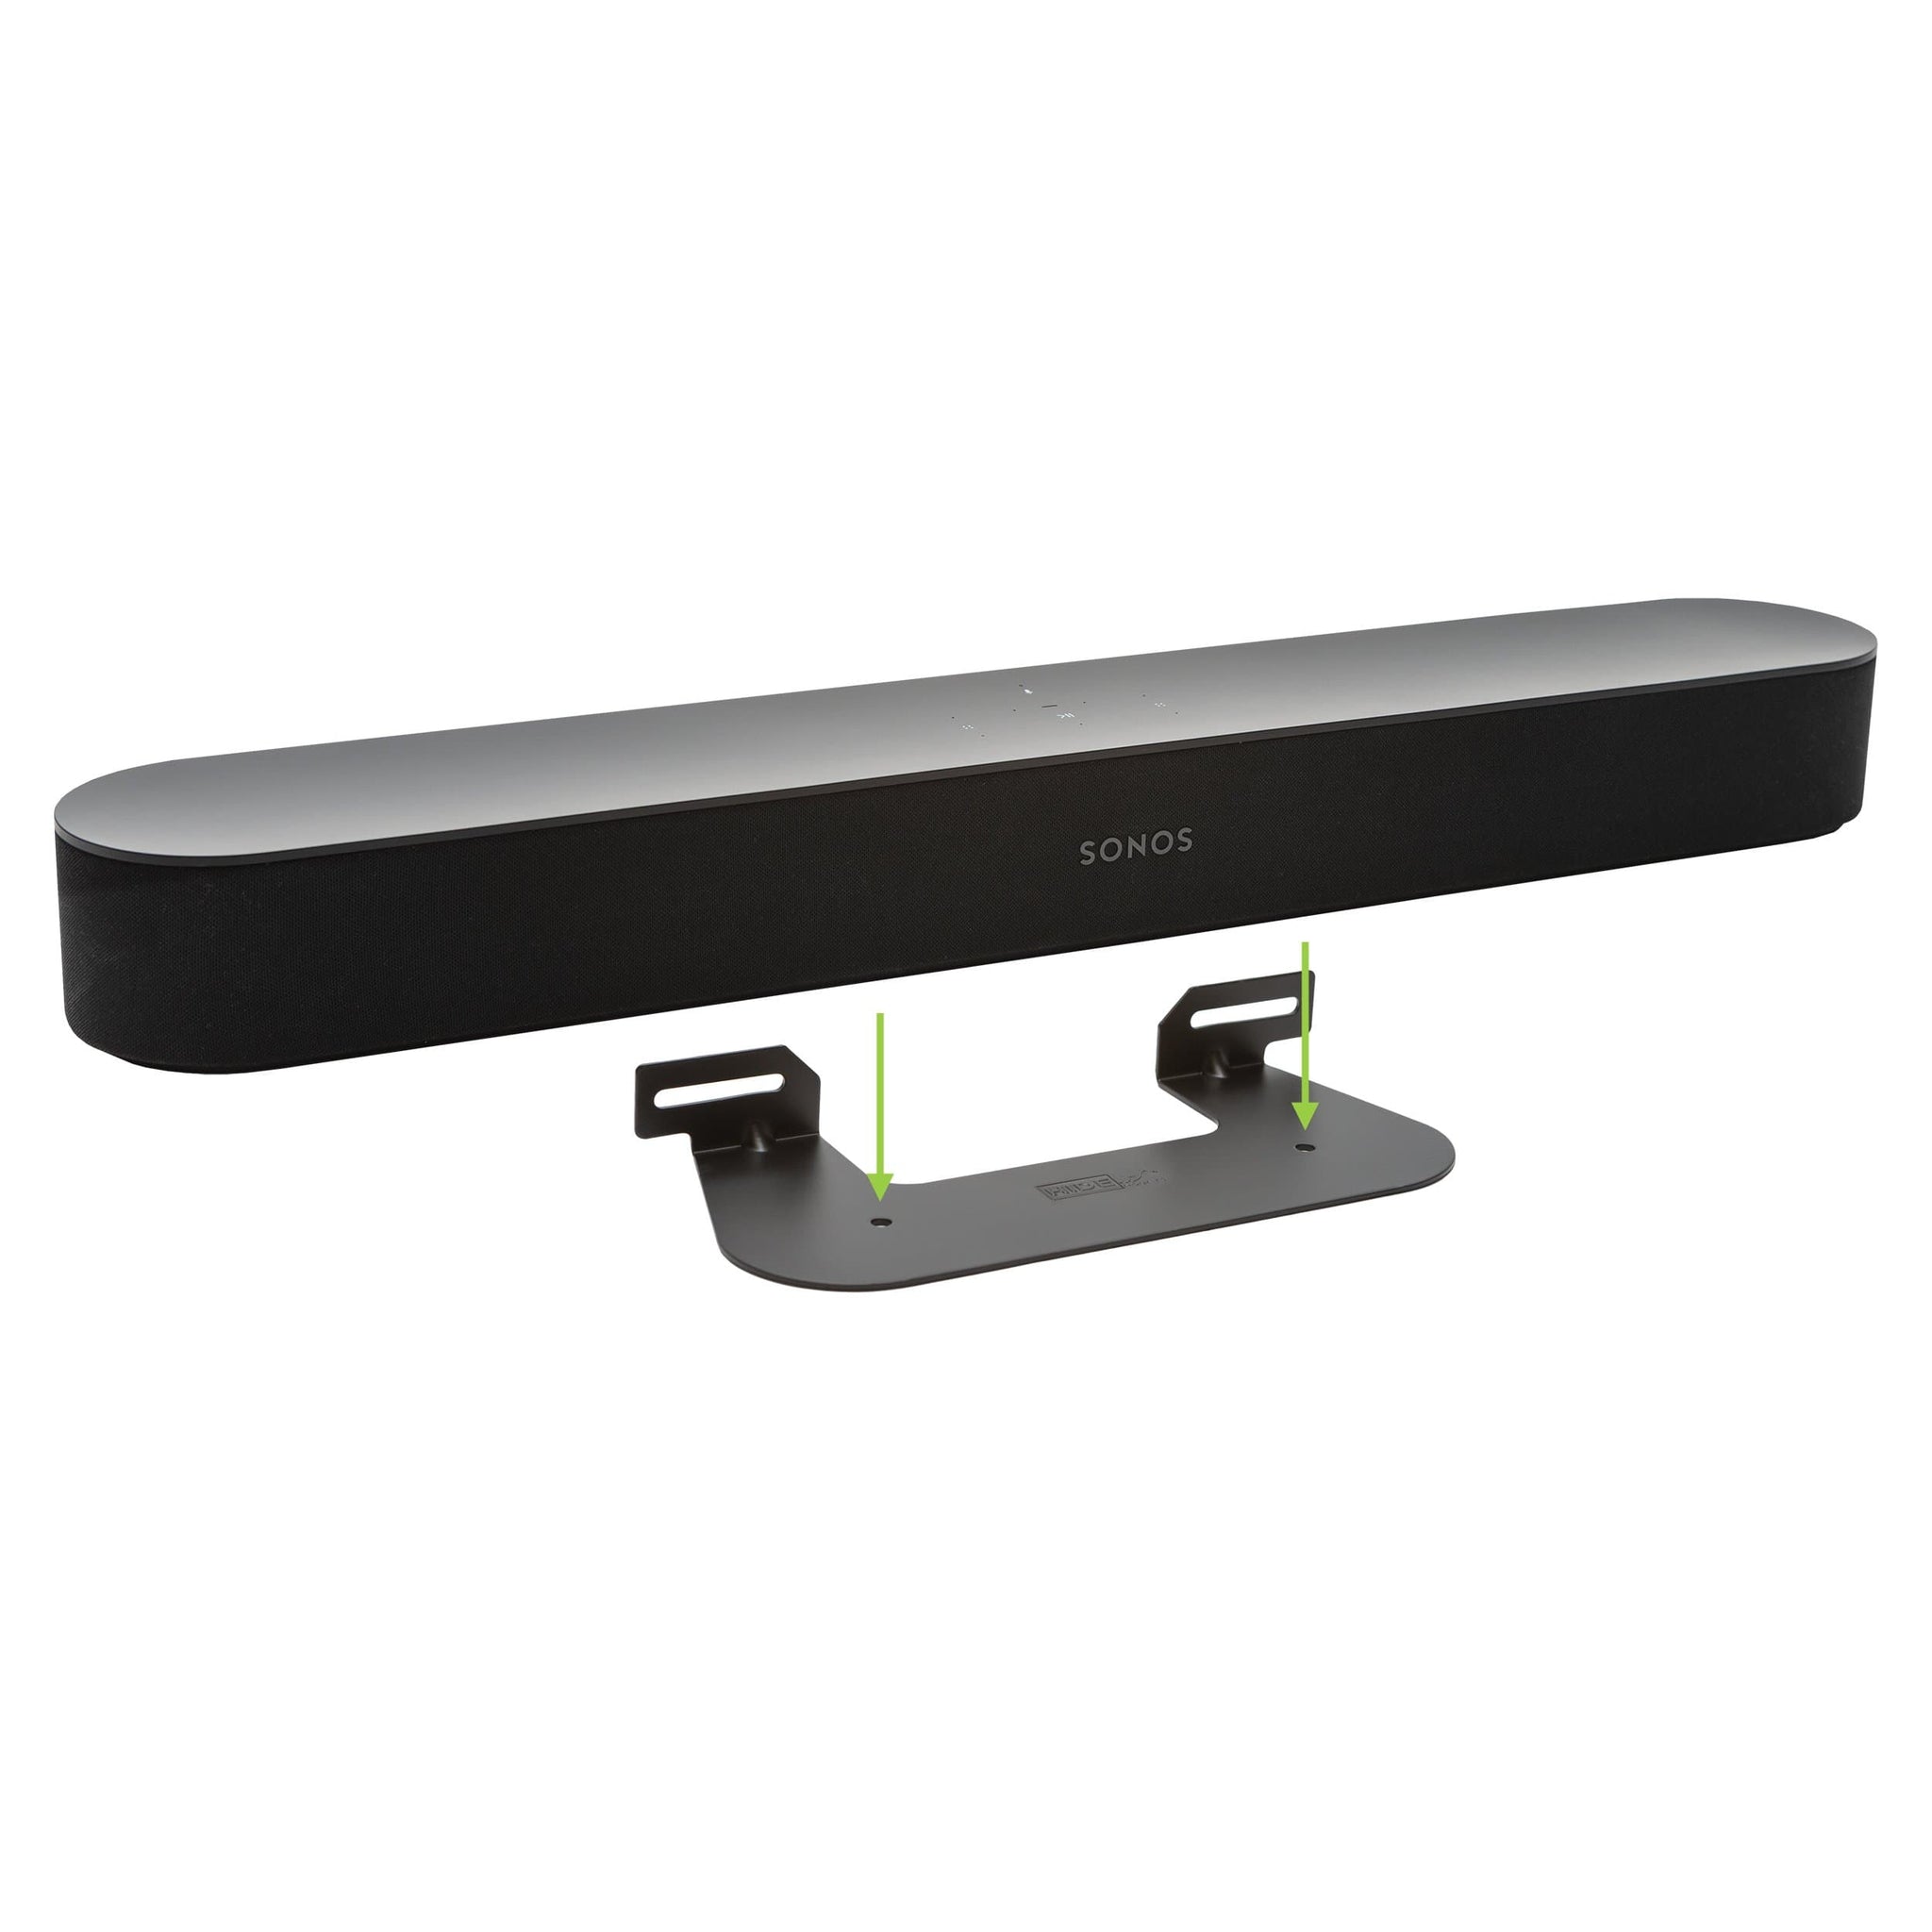 HIDEit Soundbar wall mount designed for the Sonos Beam Soundbar